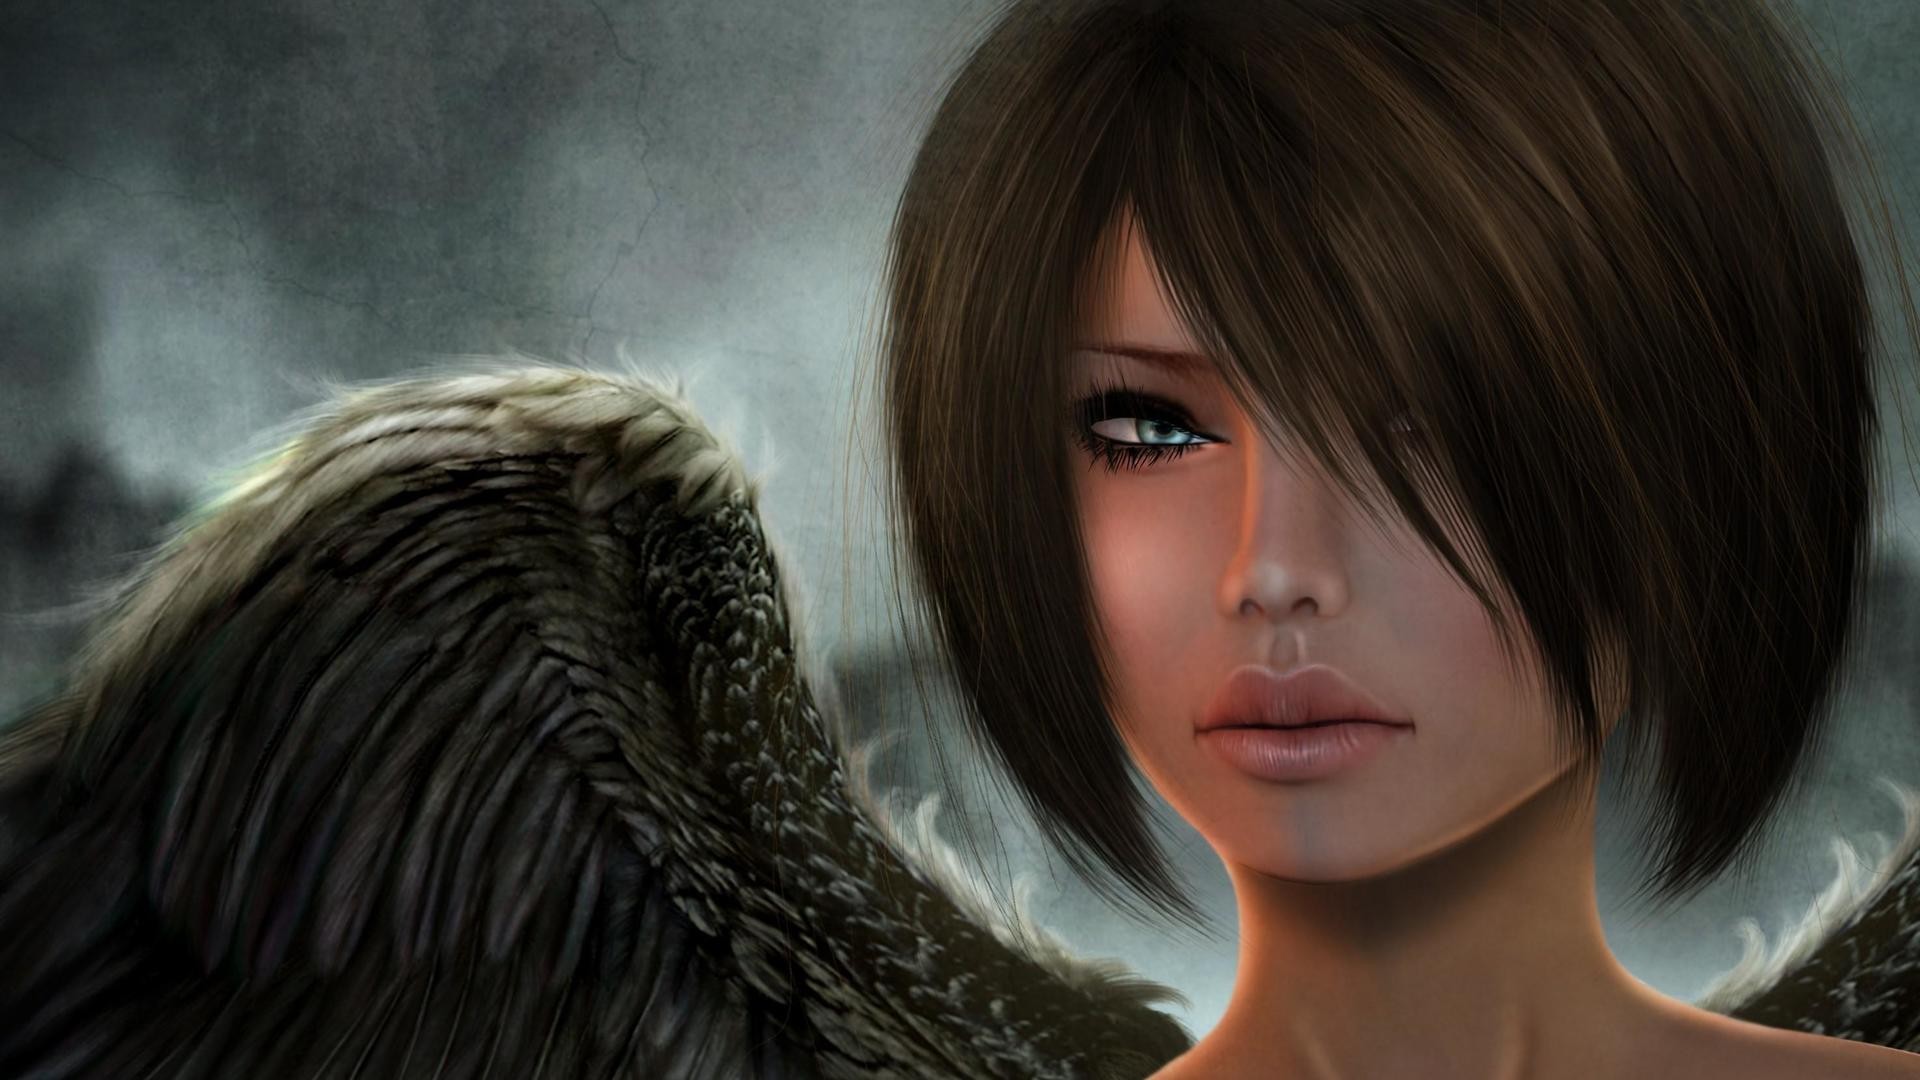 General 1920x1080 digital art fantasy art women wings angel CGI short hair face blue eyes hair in face hair over one eye portrait closeup looking at viewer fantasy girl